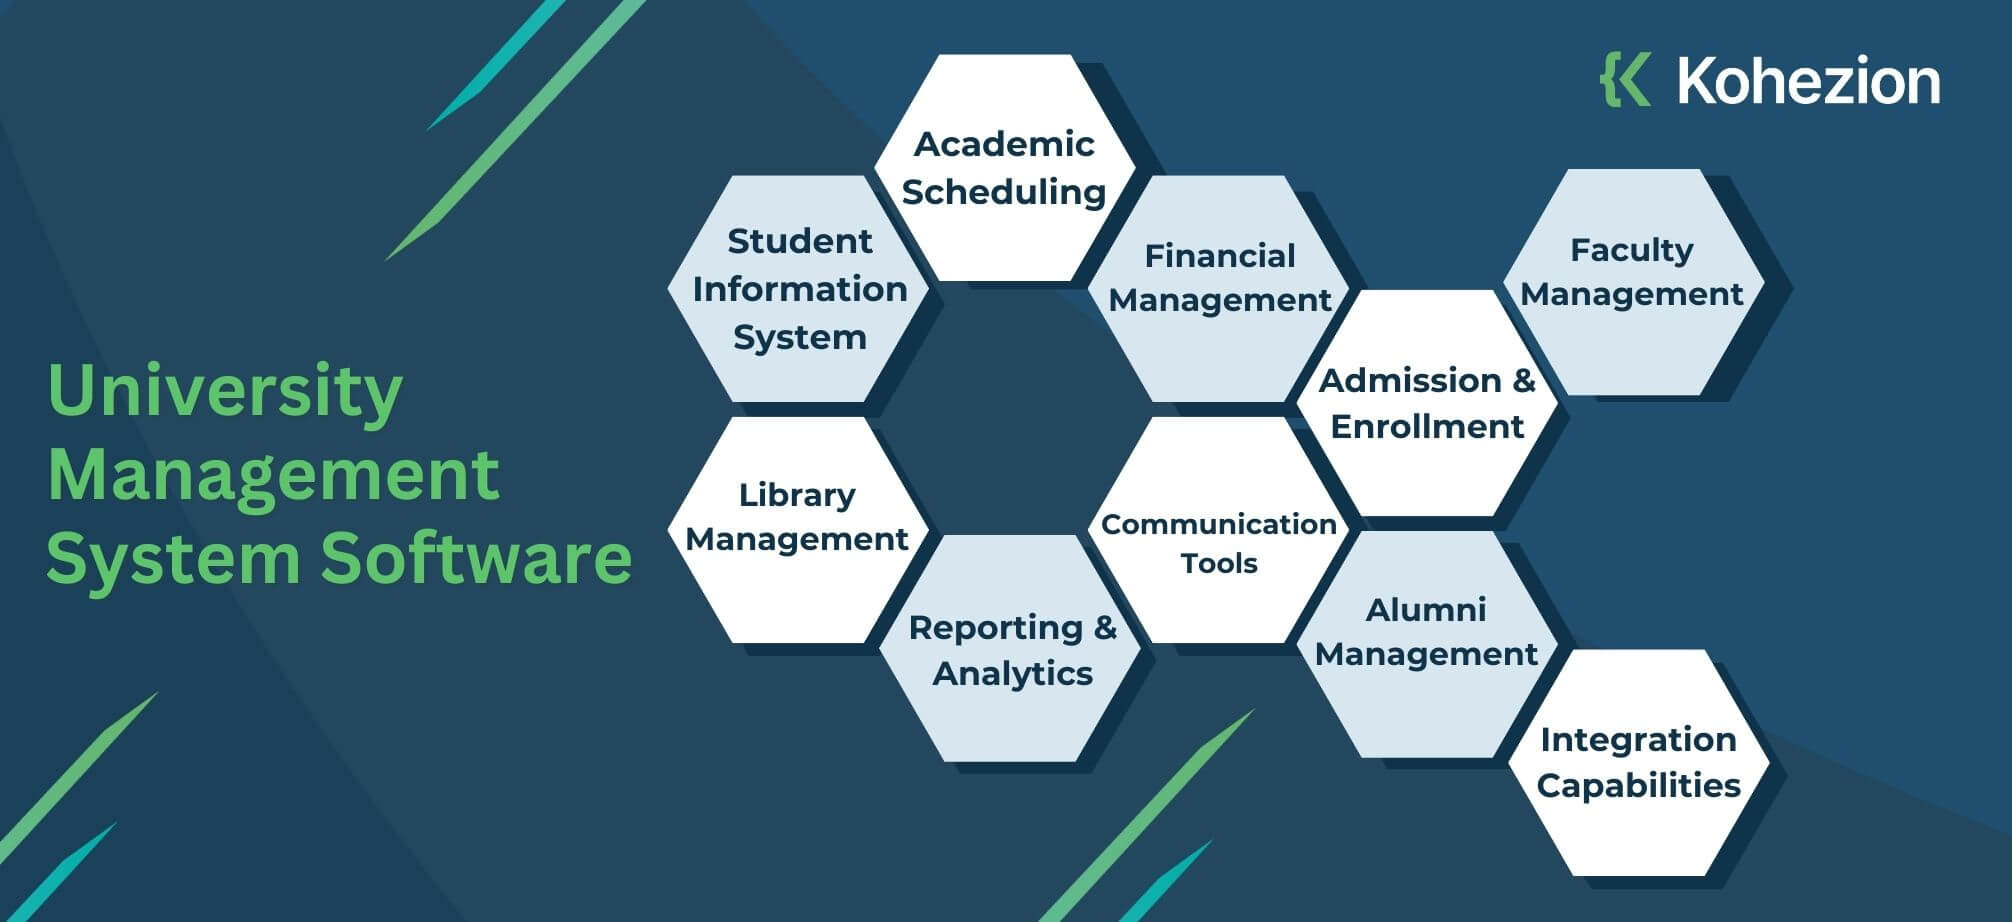 University Management System Software